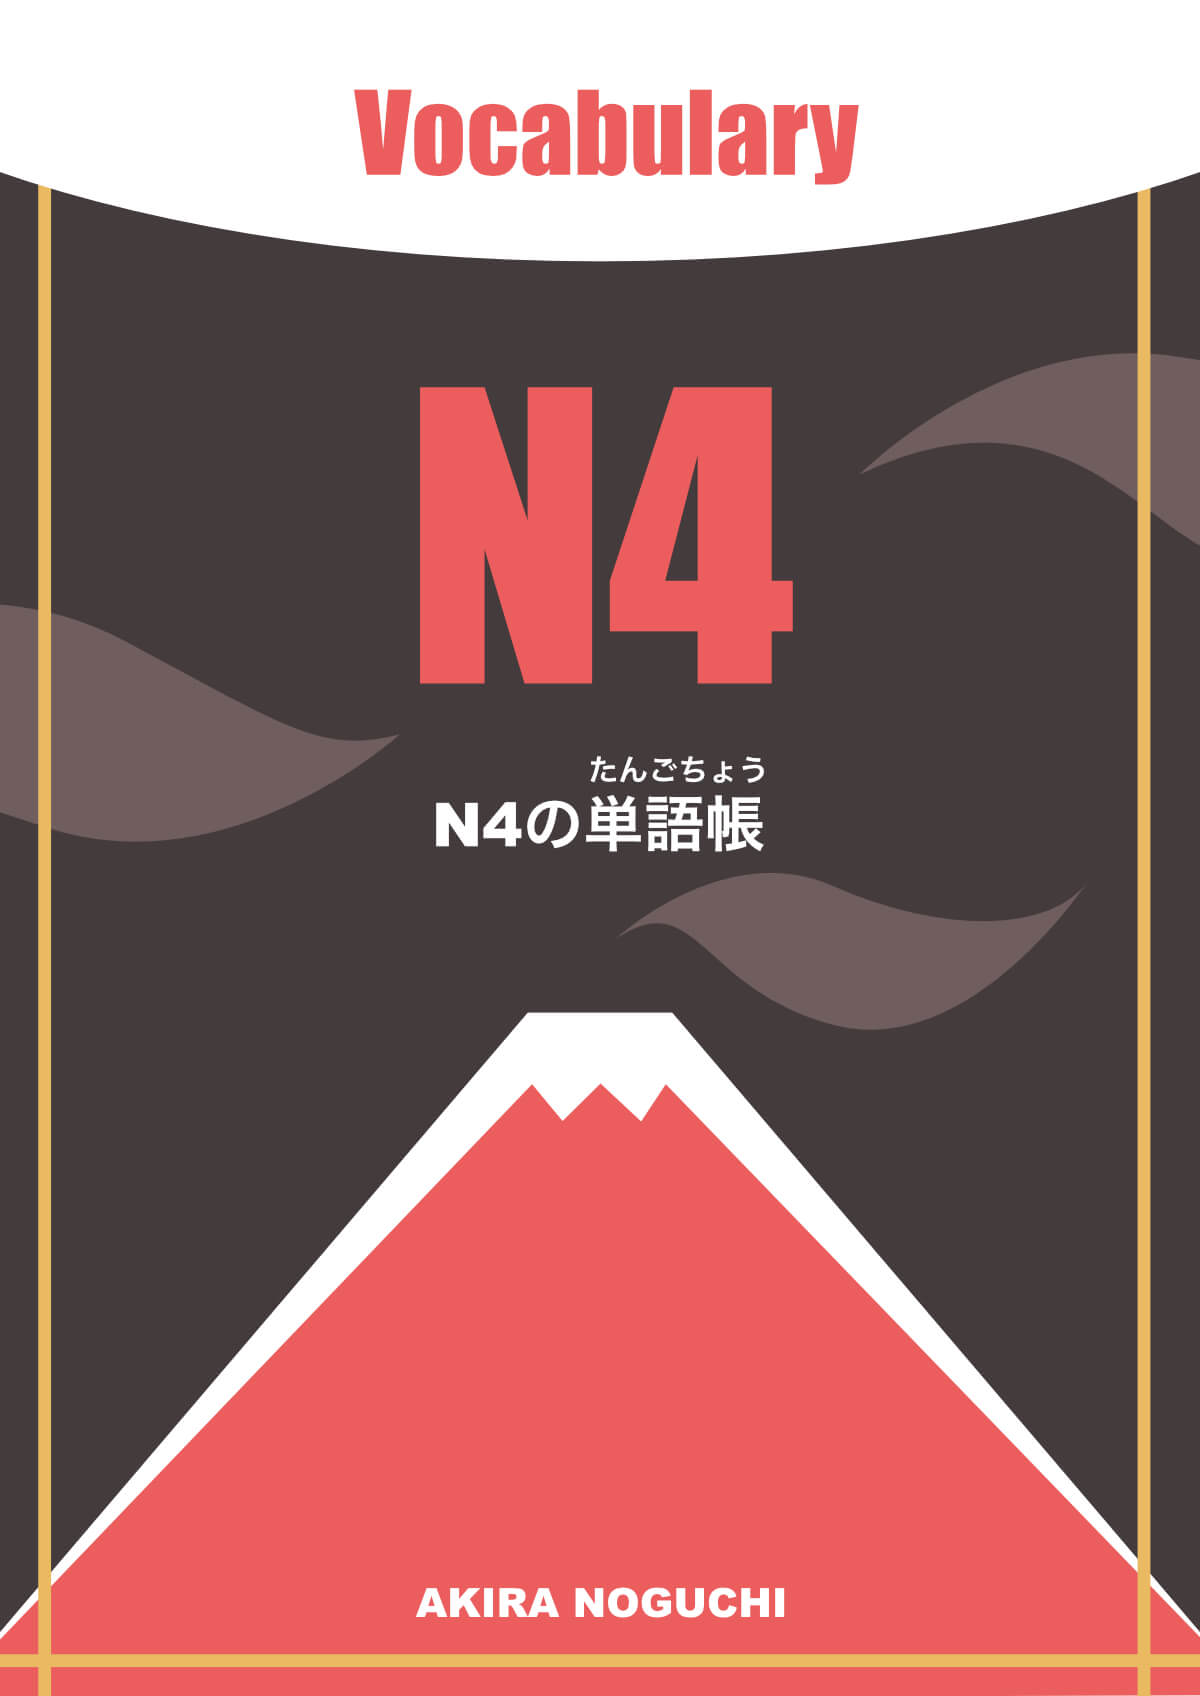 Free Japanese Study Materials Nihongo Library